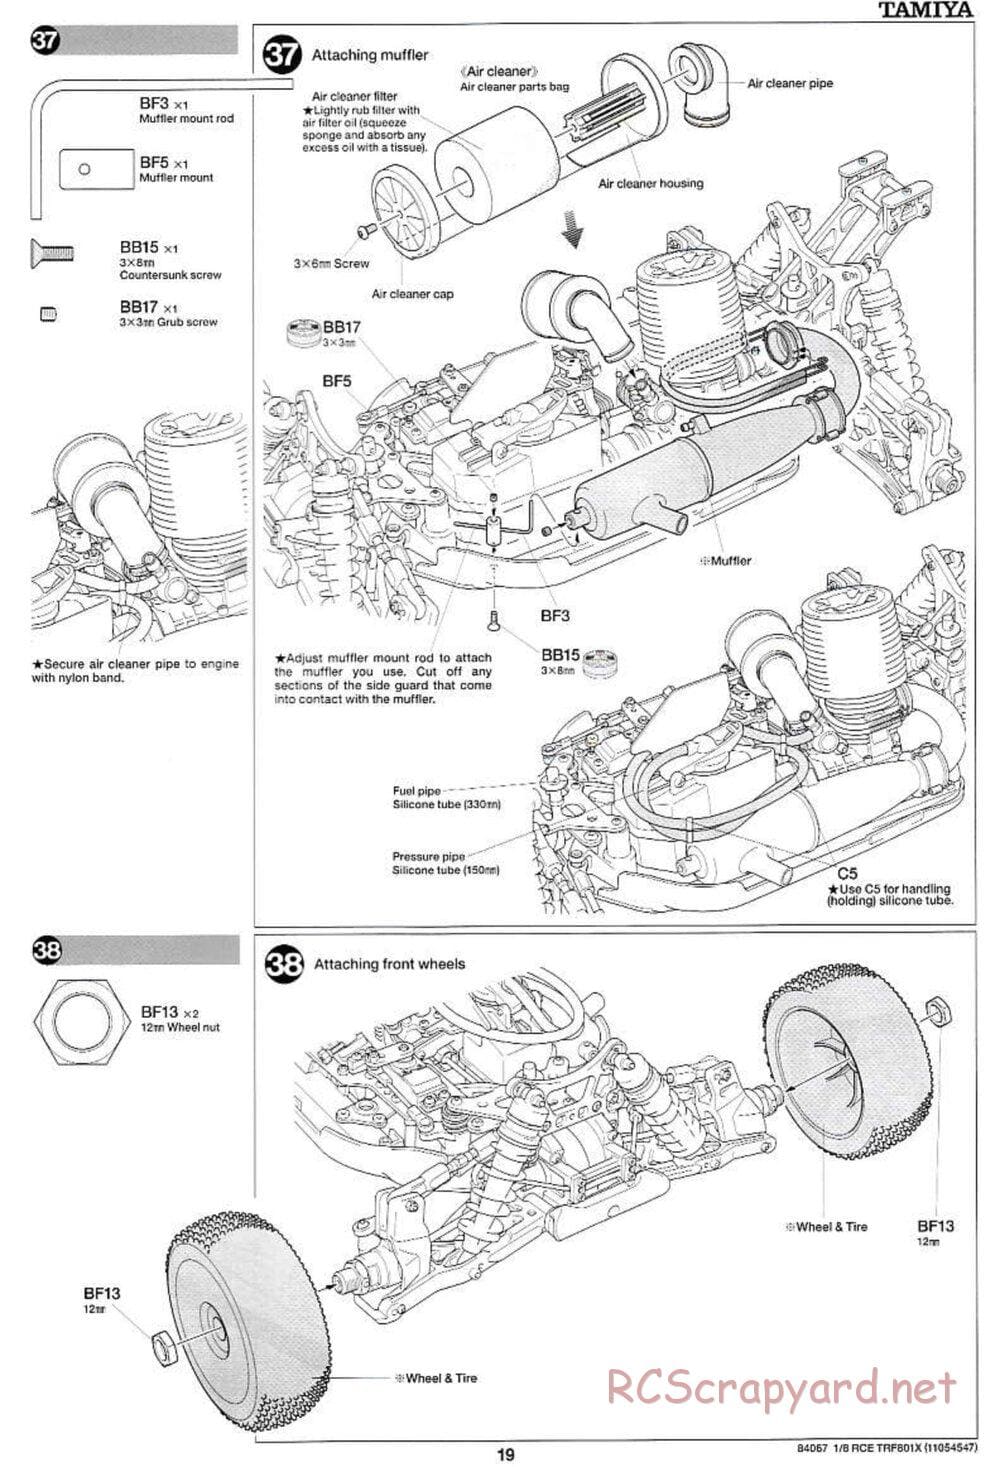 Tamiya - TRF801X Chassis - Manual - Page 19